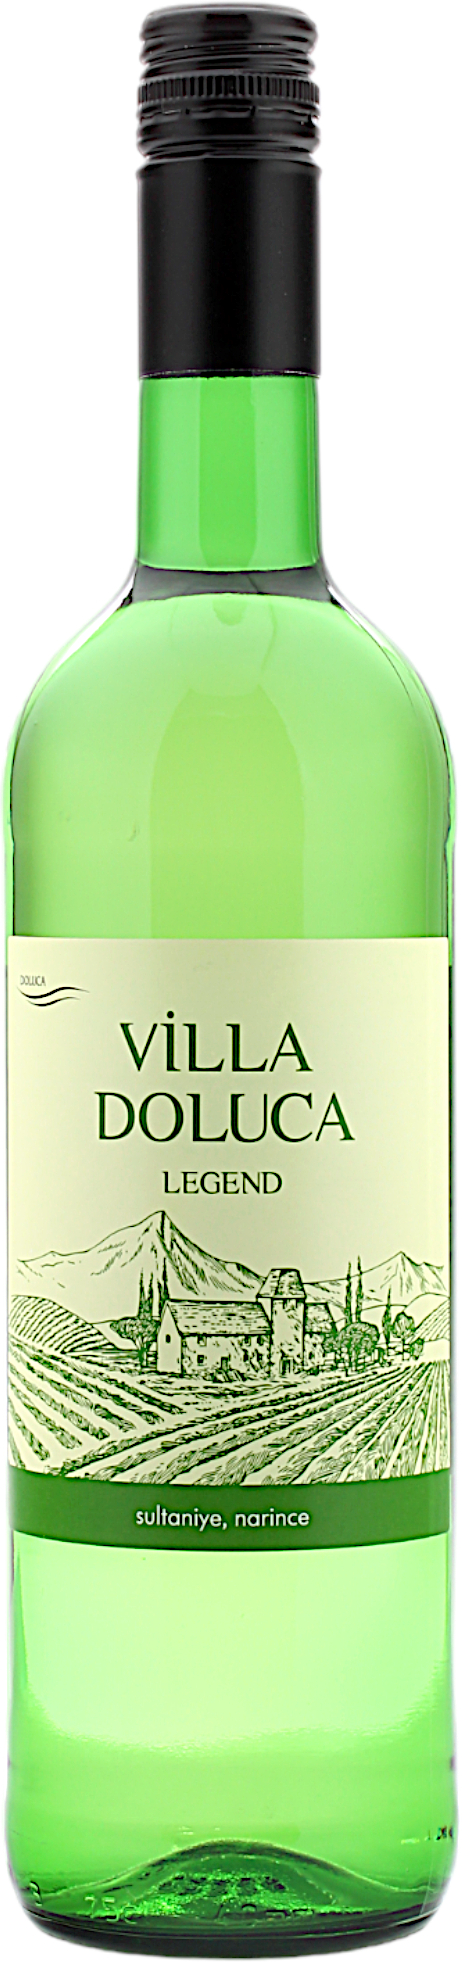 Villa Doluca Legend 2020 13.5% 0,75l